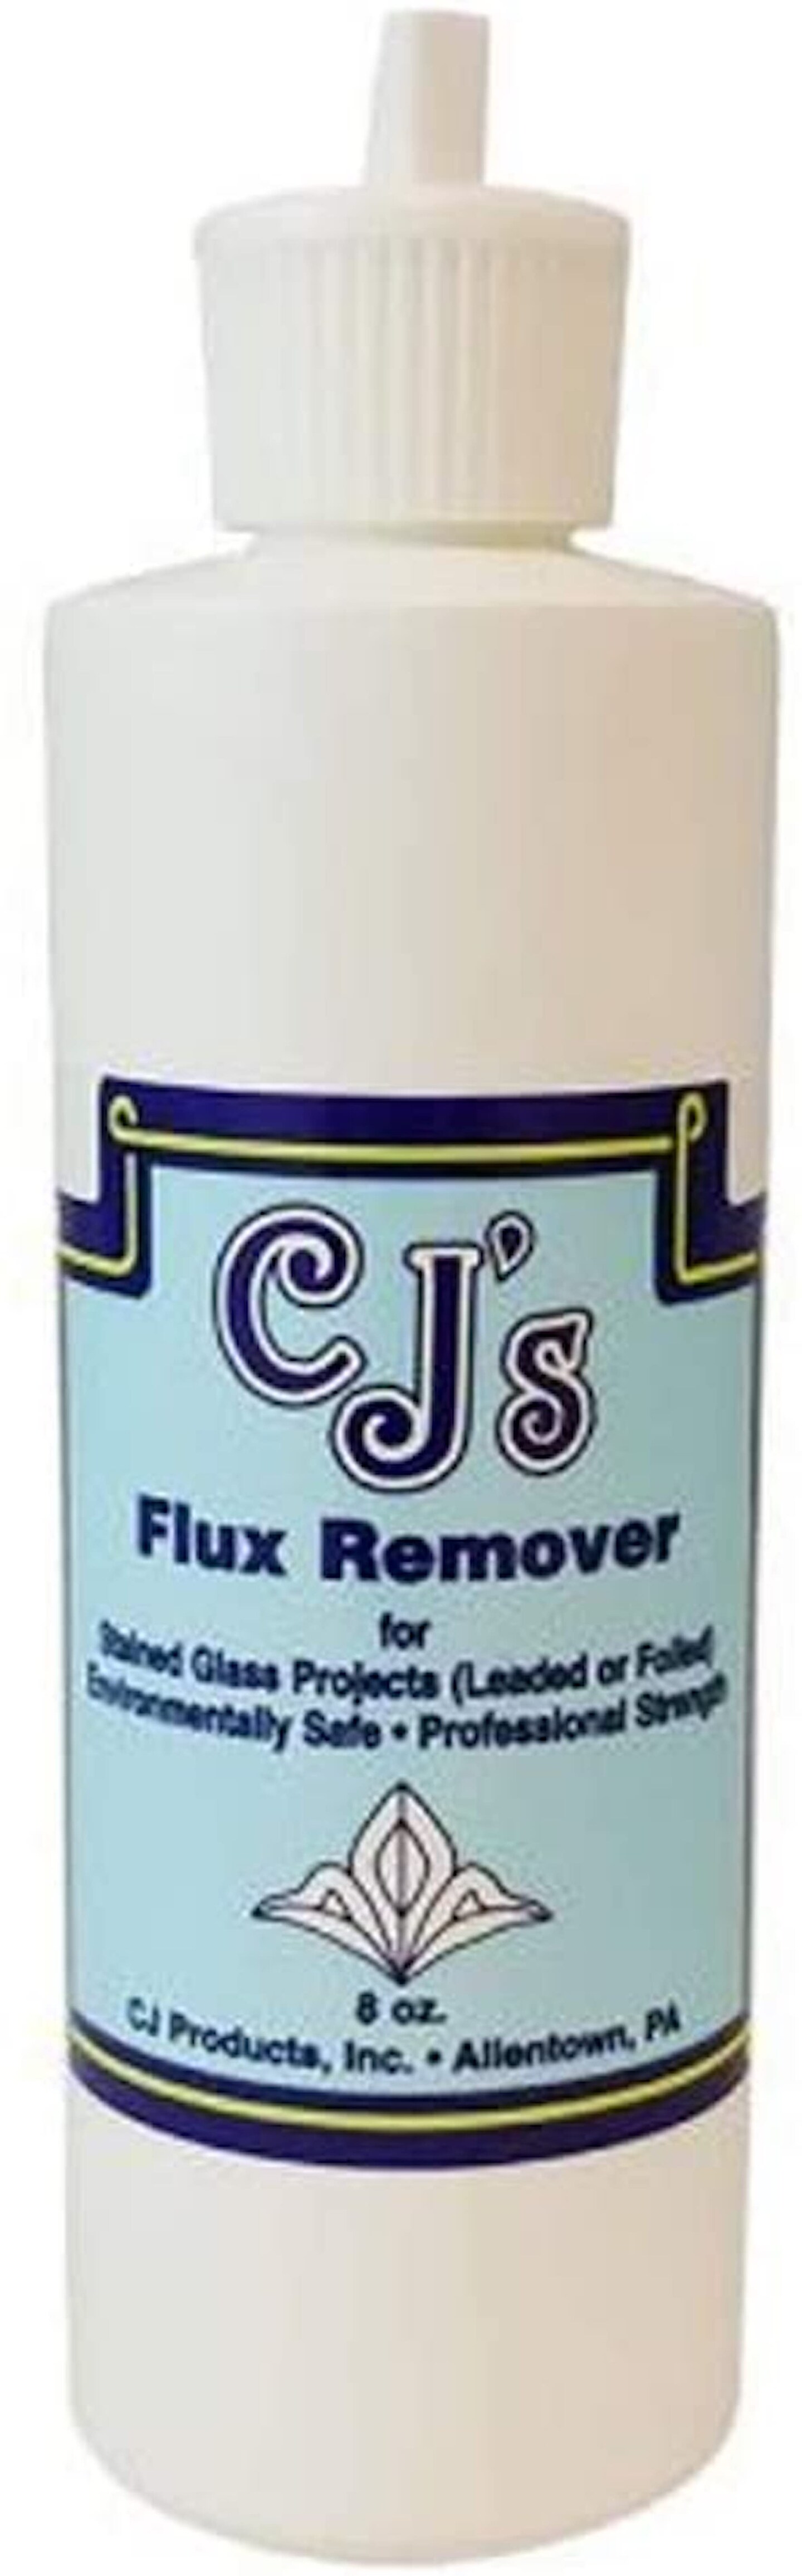 Cj&#x27;s Flux Remover 8 oz